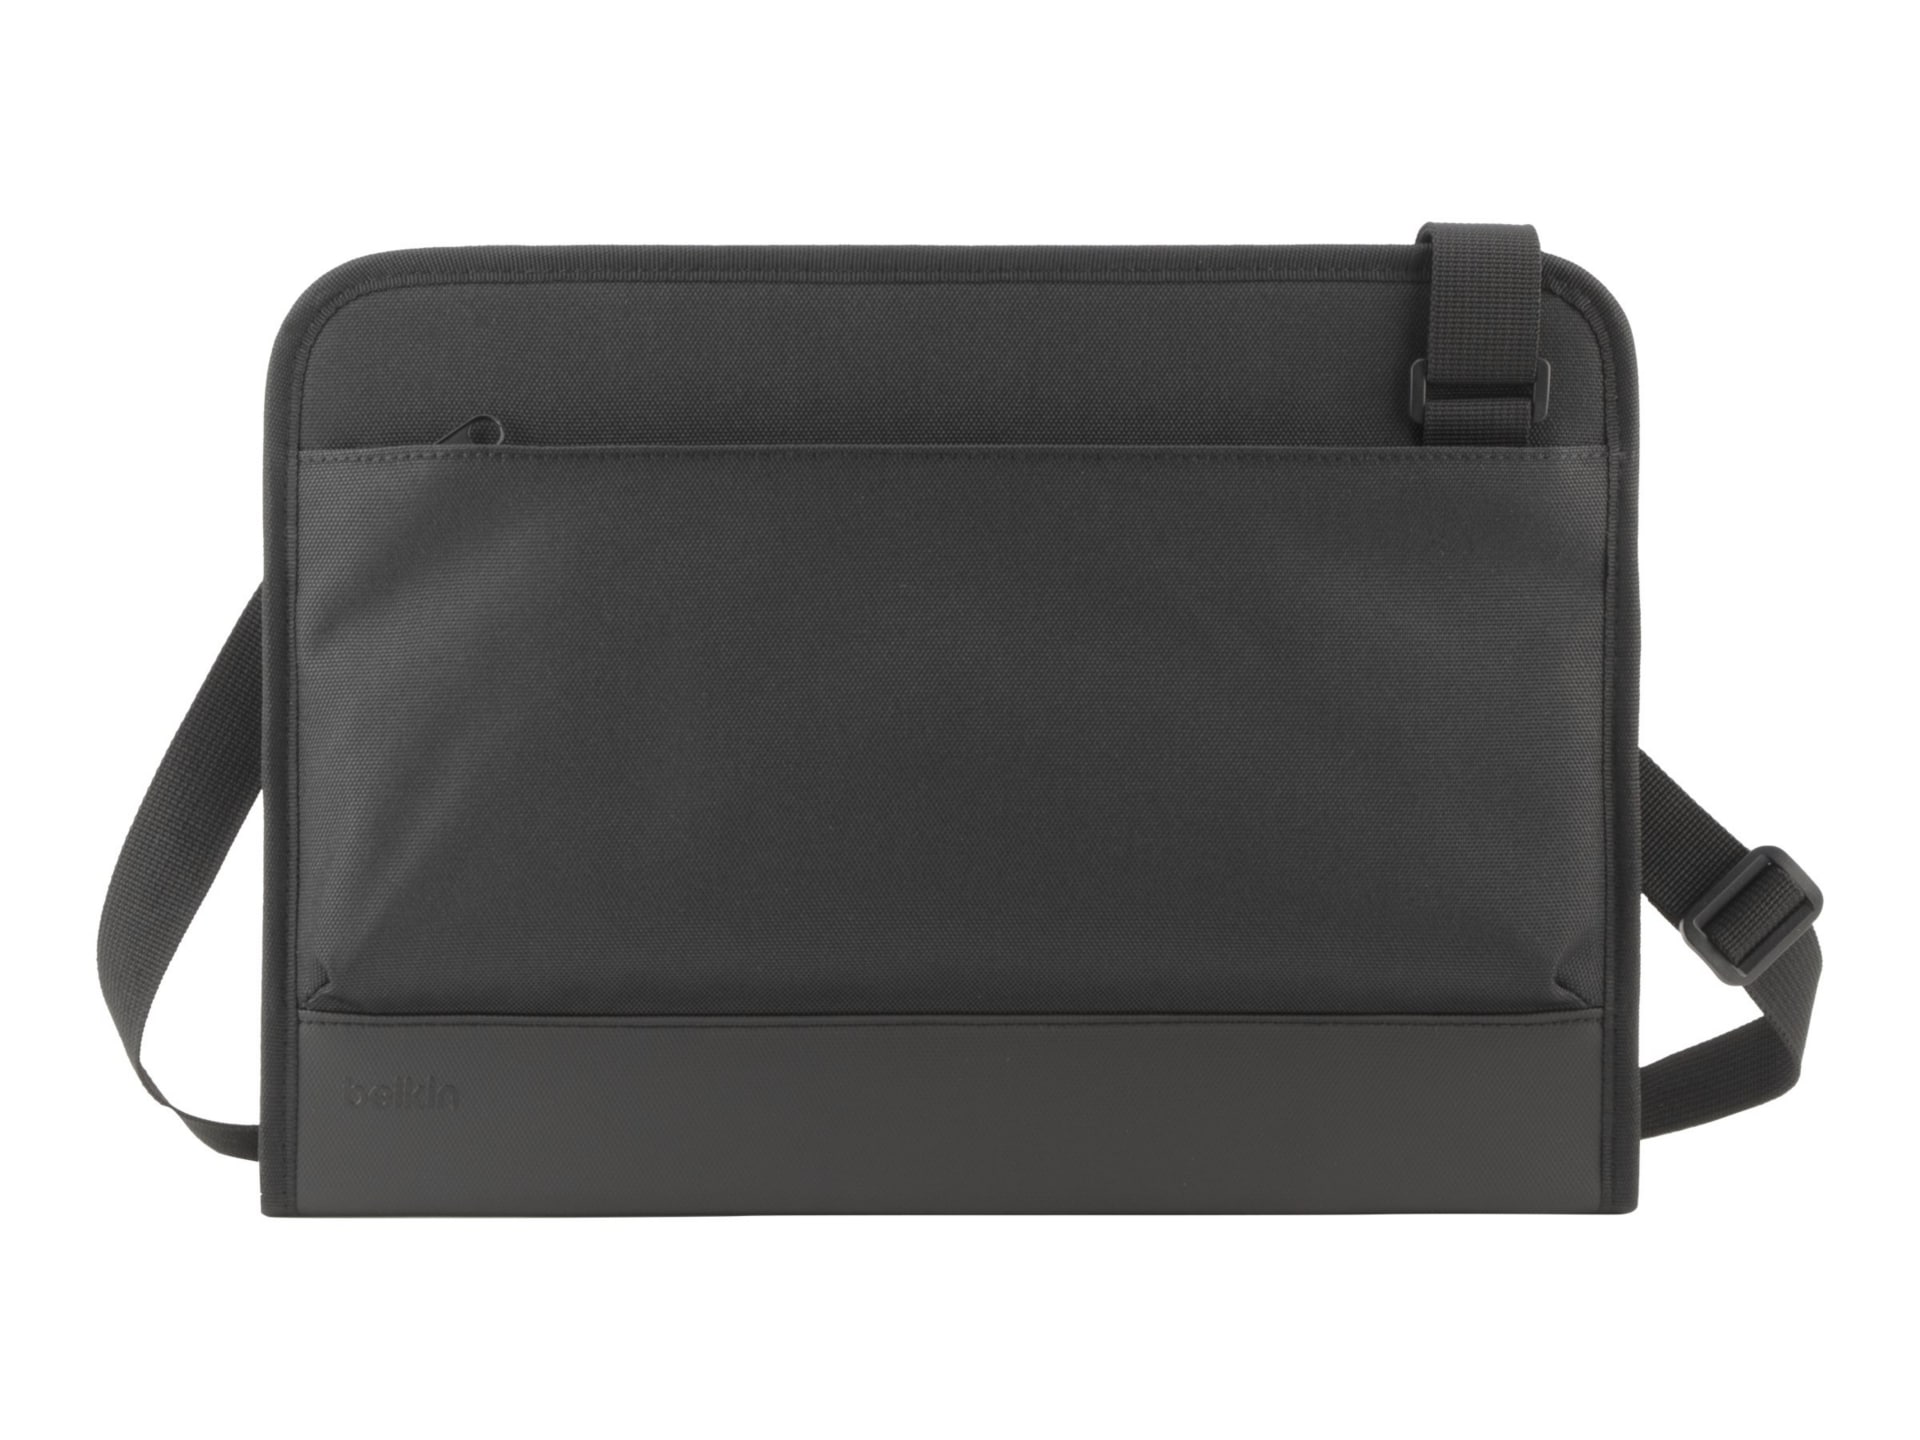 Belkin 13/14 Inch Laptop Case - 13 - 14" Always On Laptop Sleeve with Carrying Shoulder Strap - Black